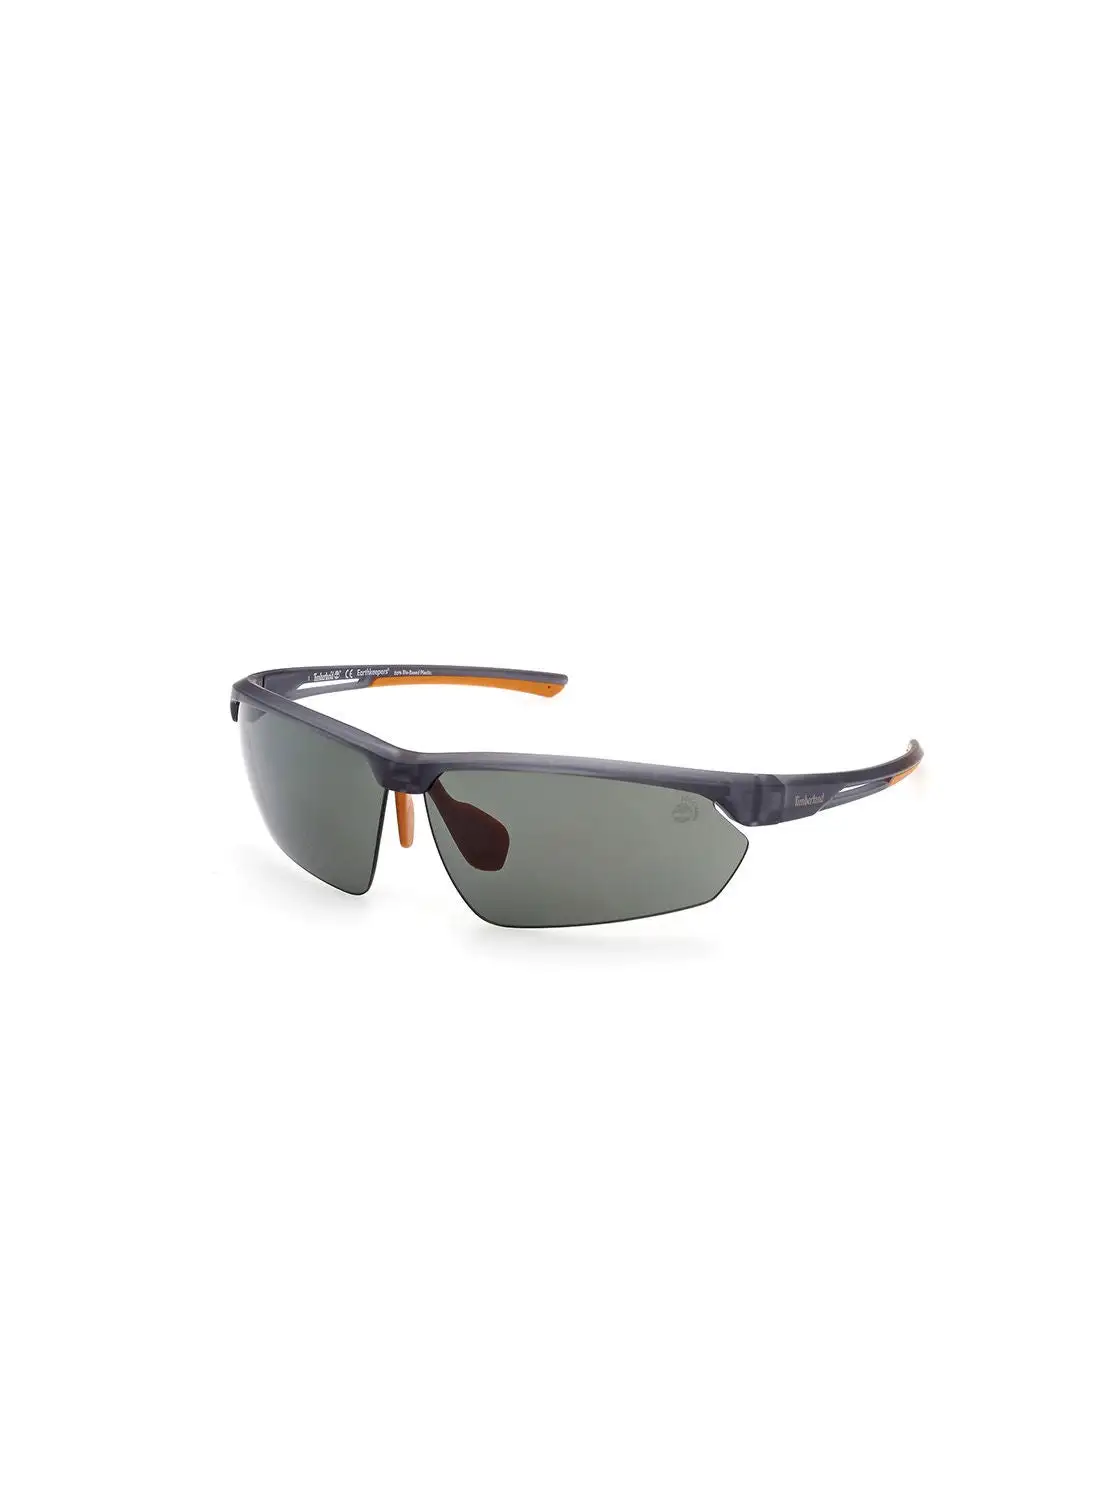 Timberland Men's Polarized Rectangular Sunglasses - TB926420R72 - Lens Size: 72 Mm